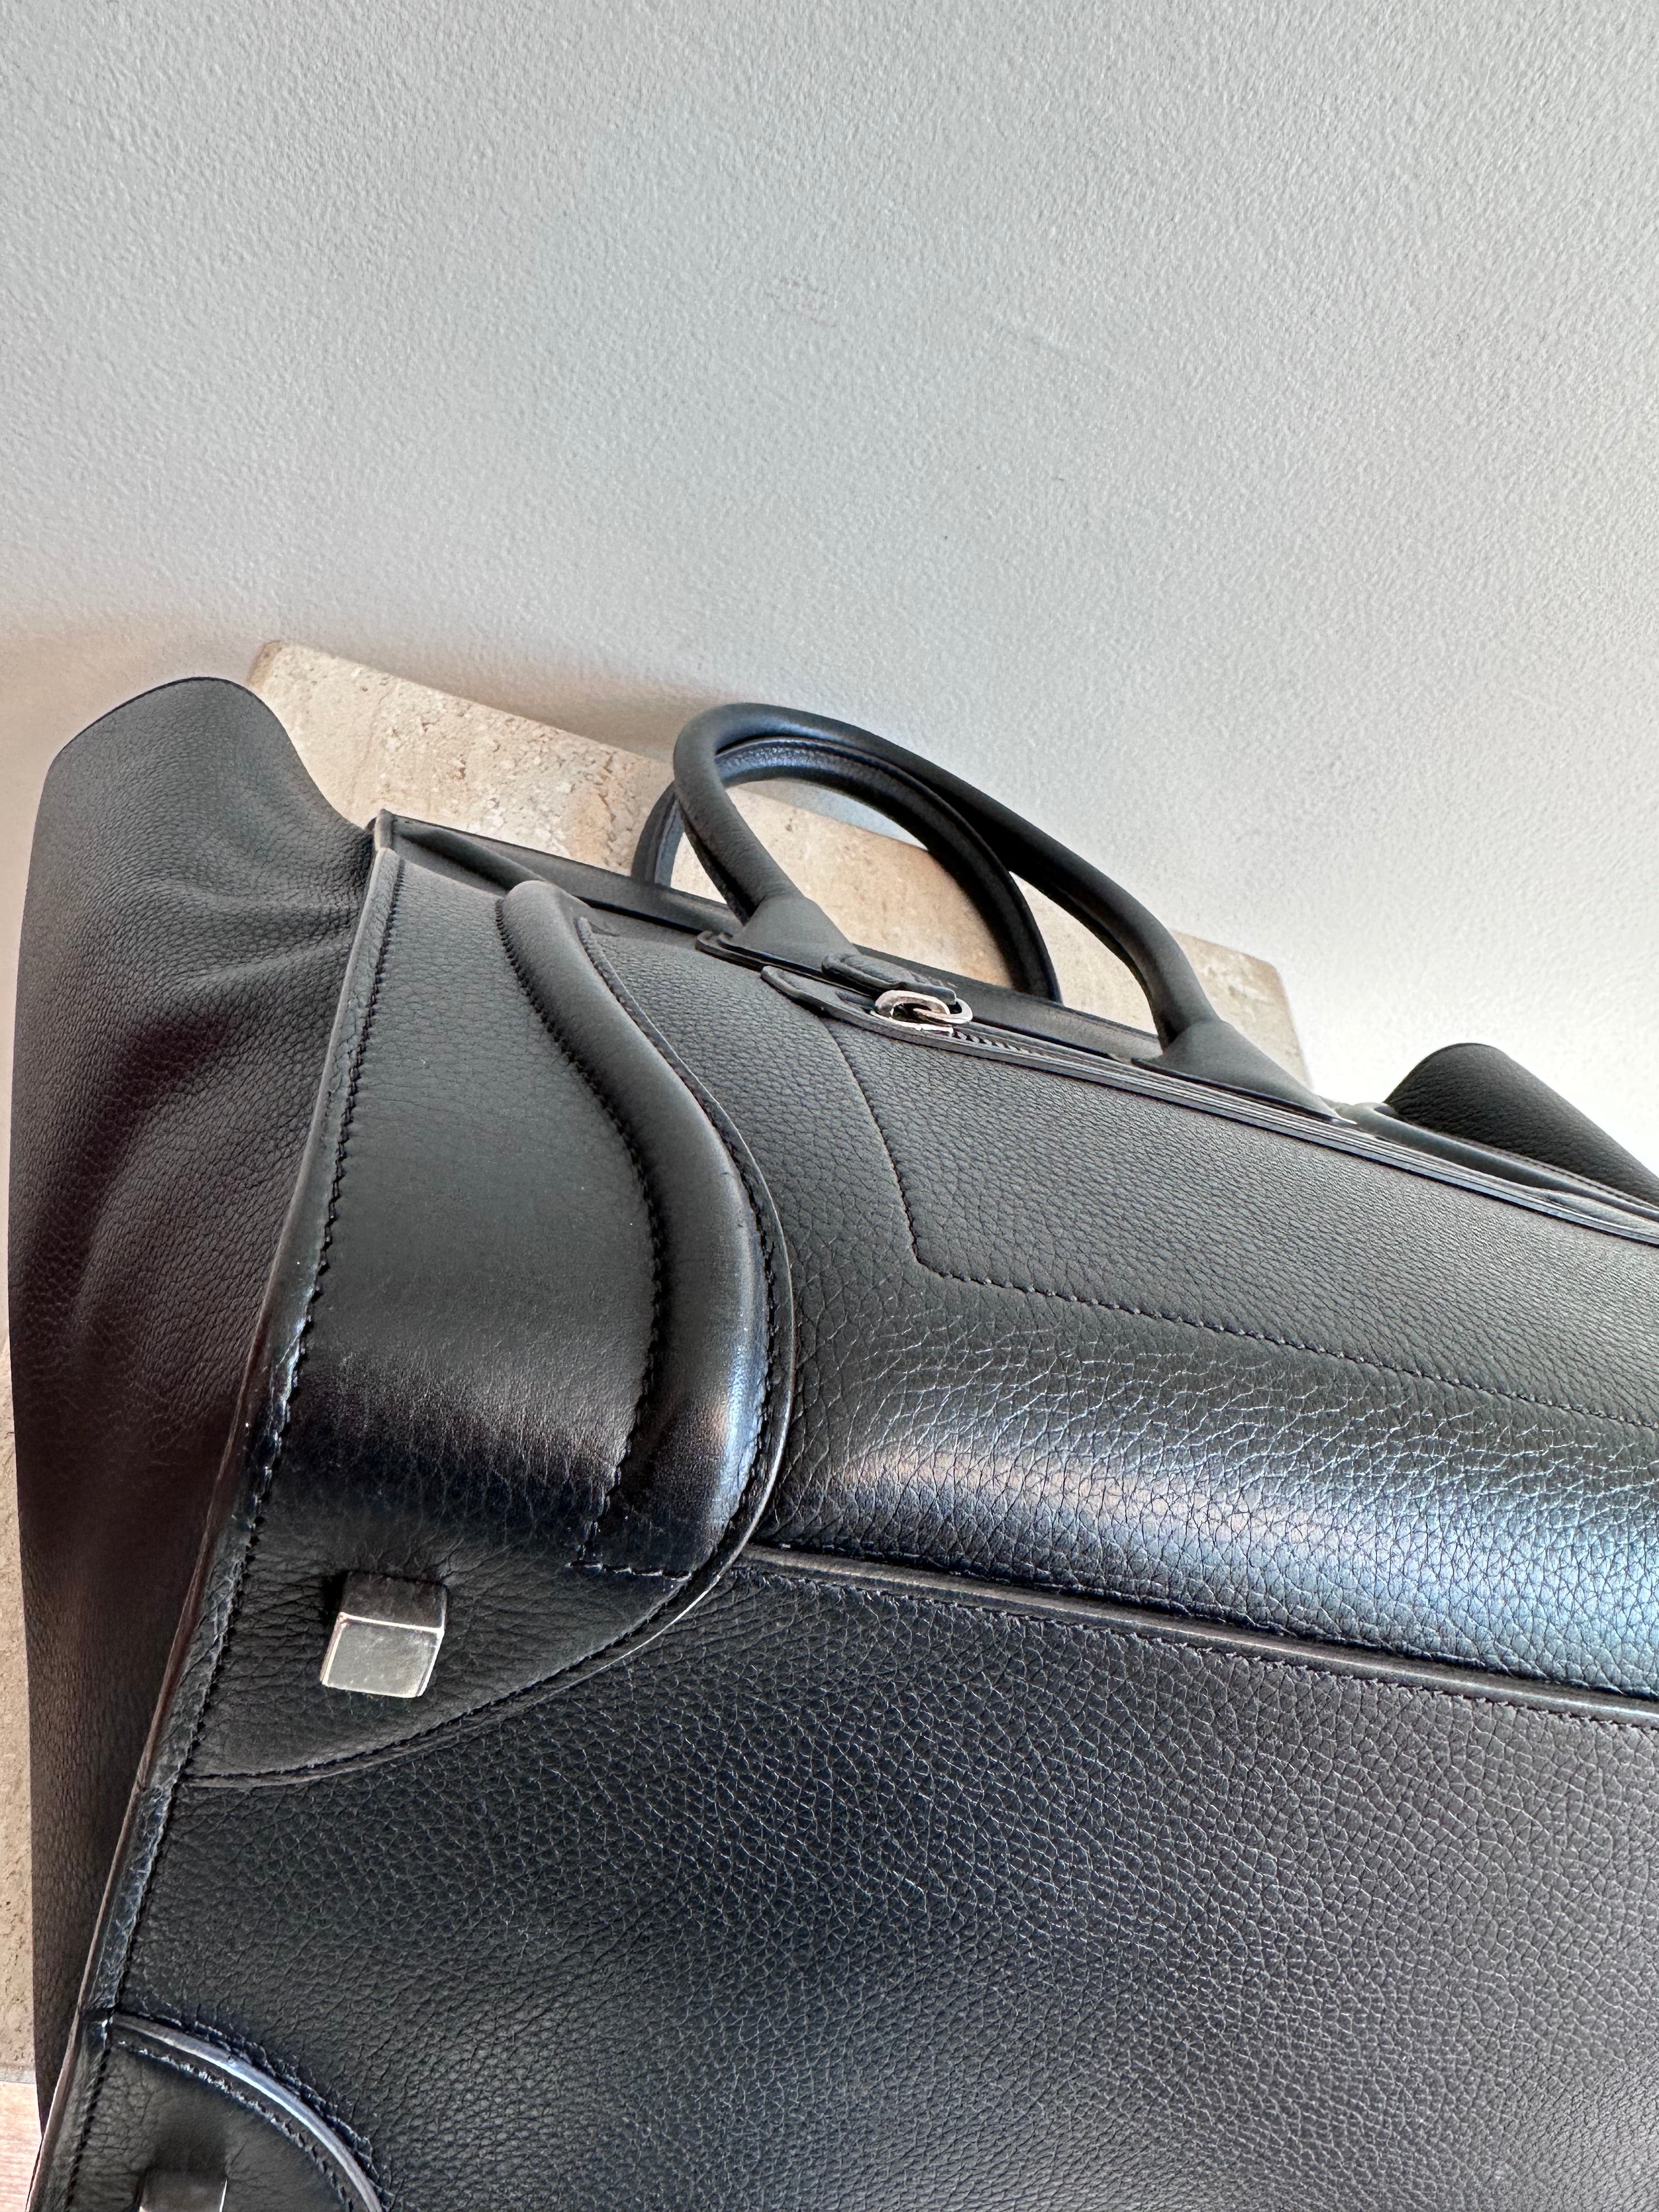 Pre-Owned CELINE Black Leather Phantom Luggage Tote